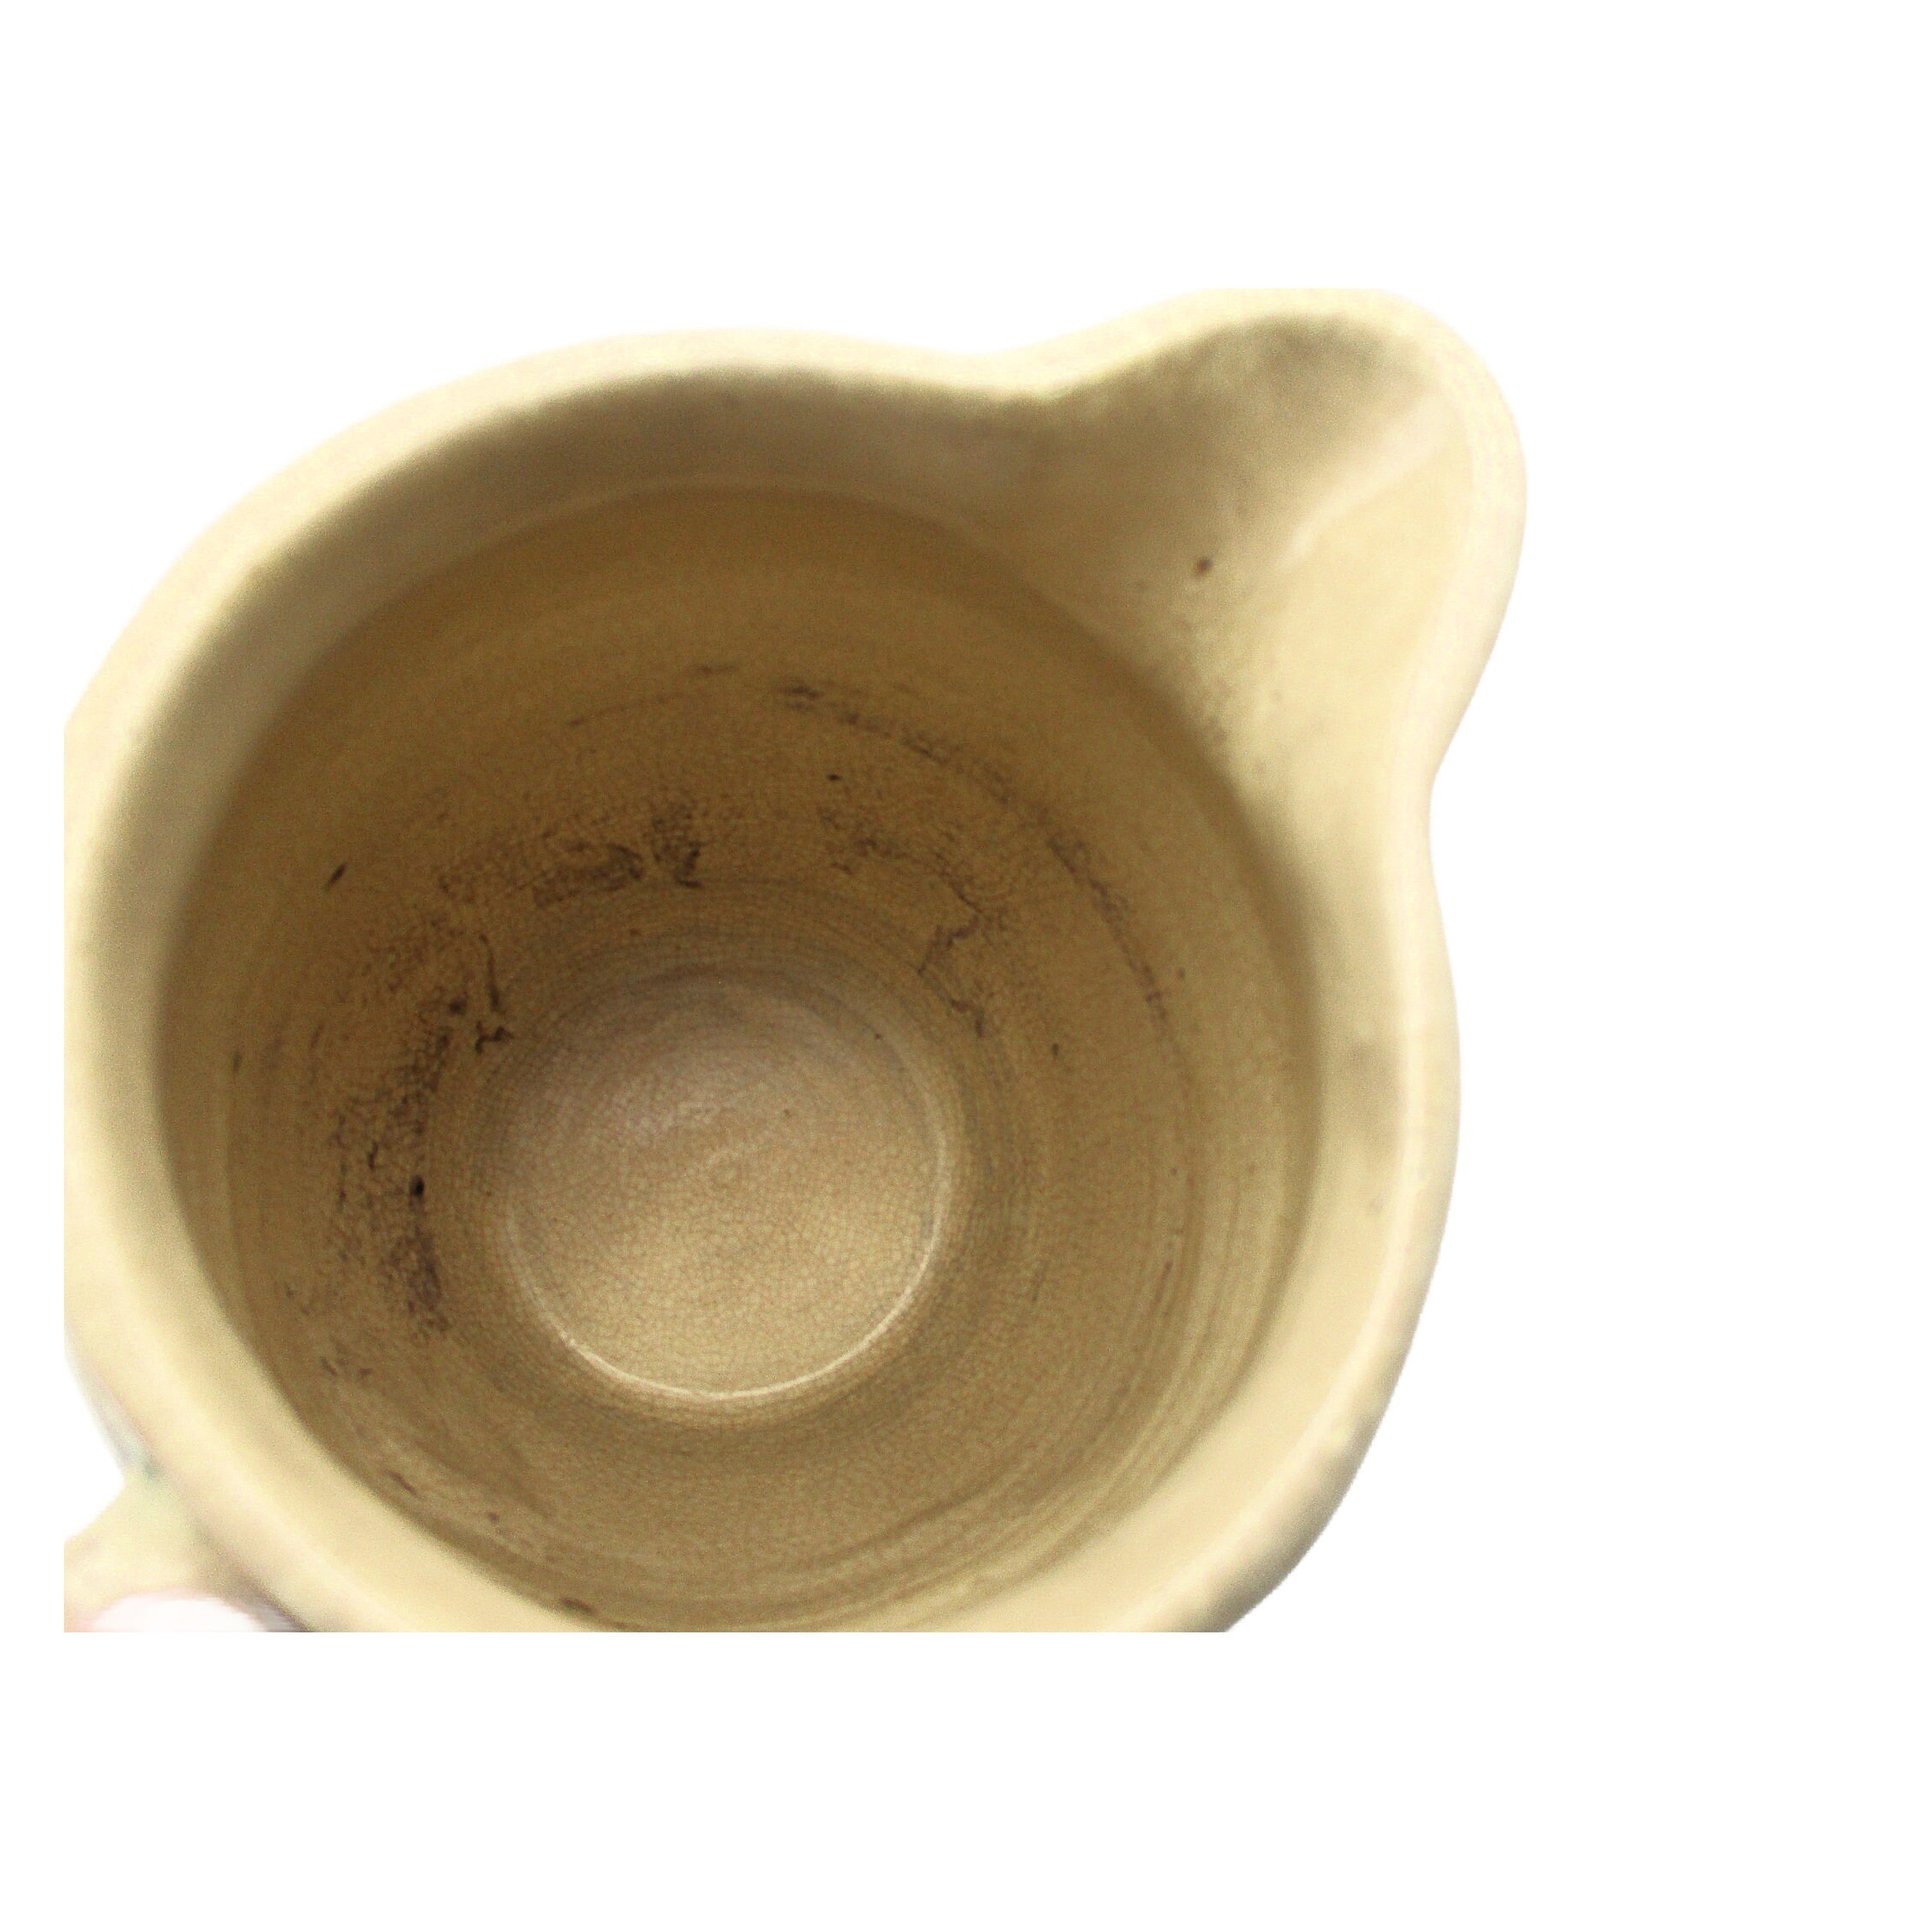 Weller Pottery Pitcher, Zona The Splashing Duck, Green Glaze, Art Pottery, Stoneware 1920s